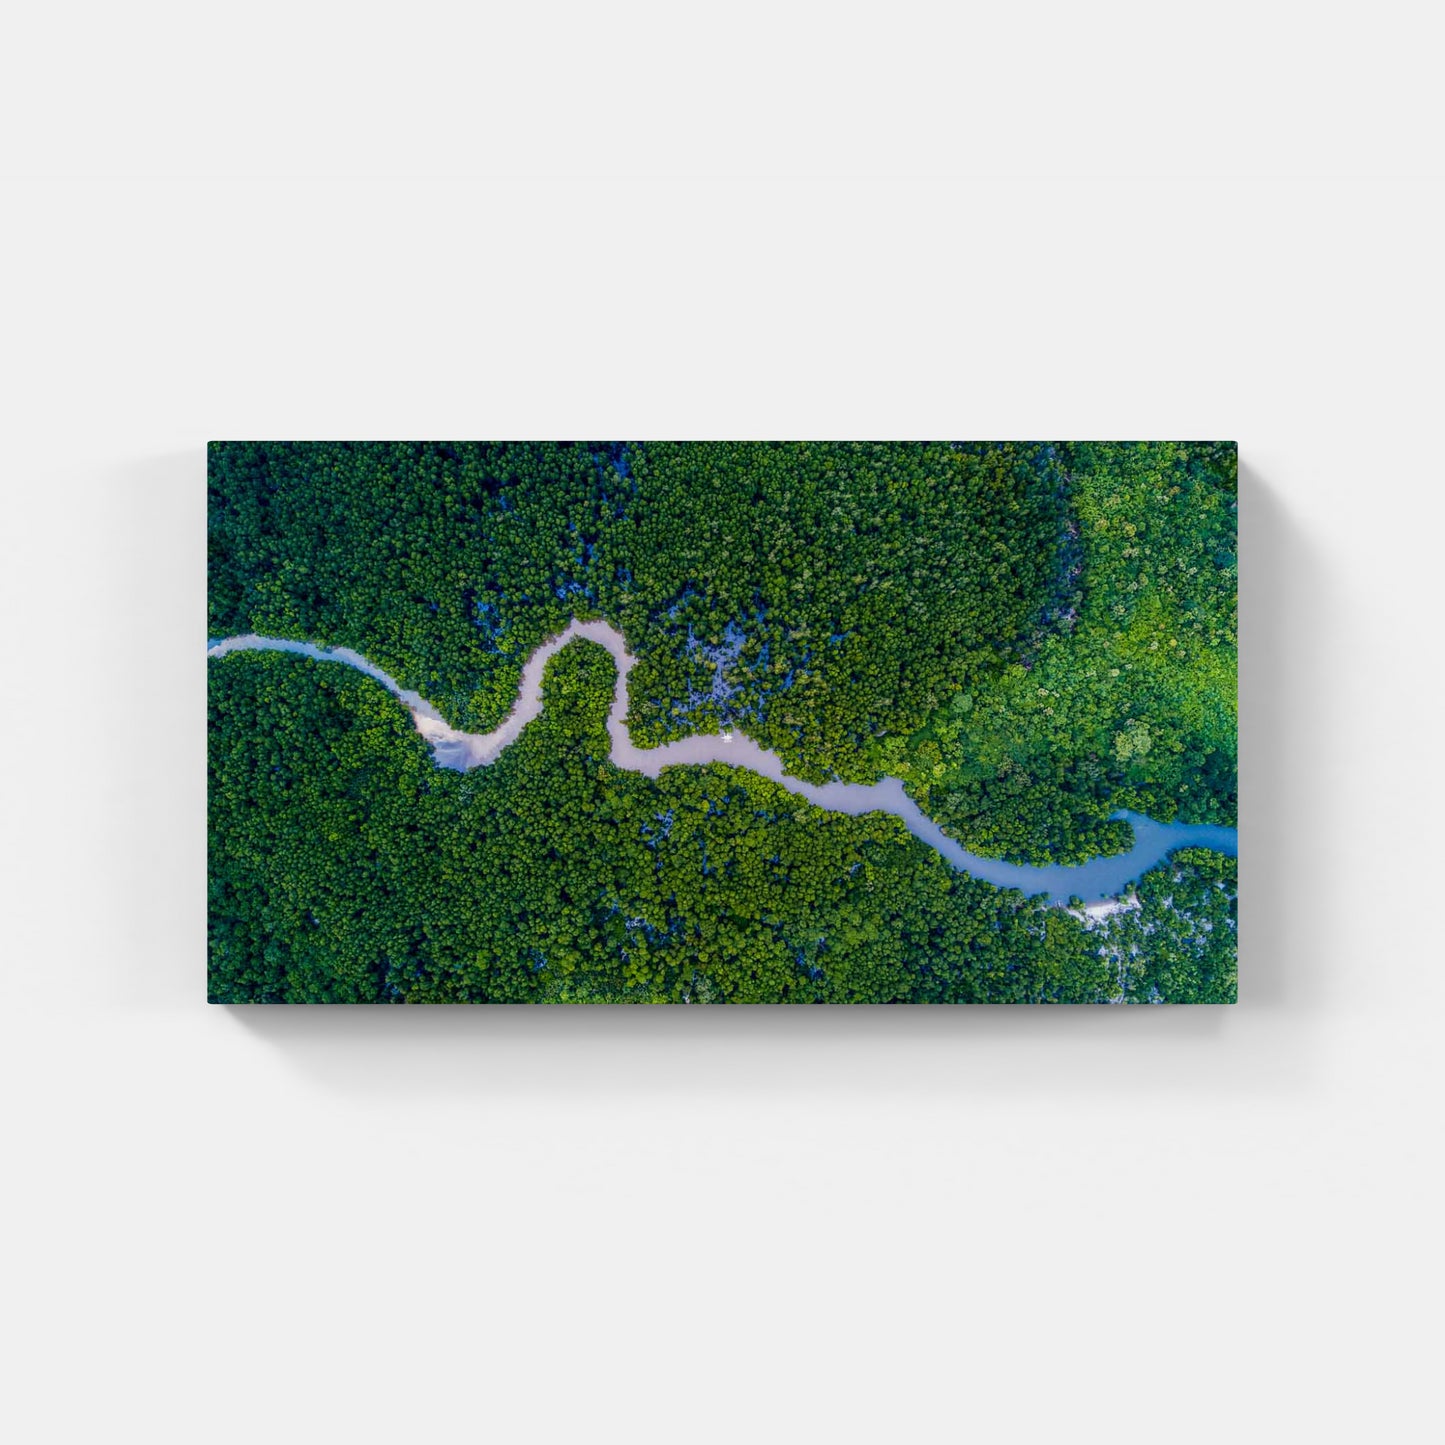 River through mangroves, Philippines